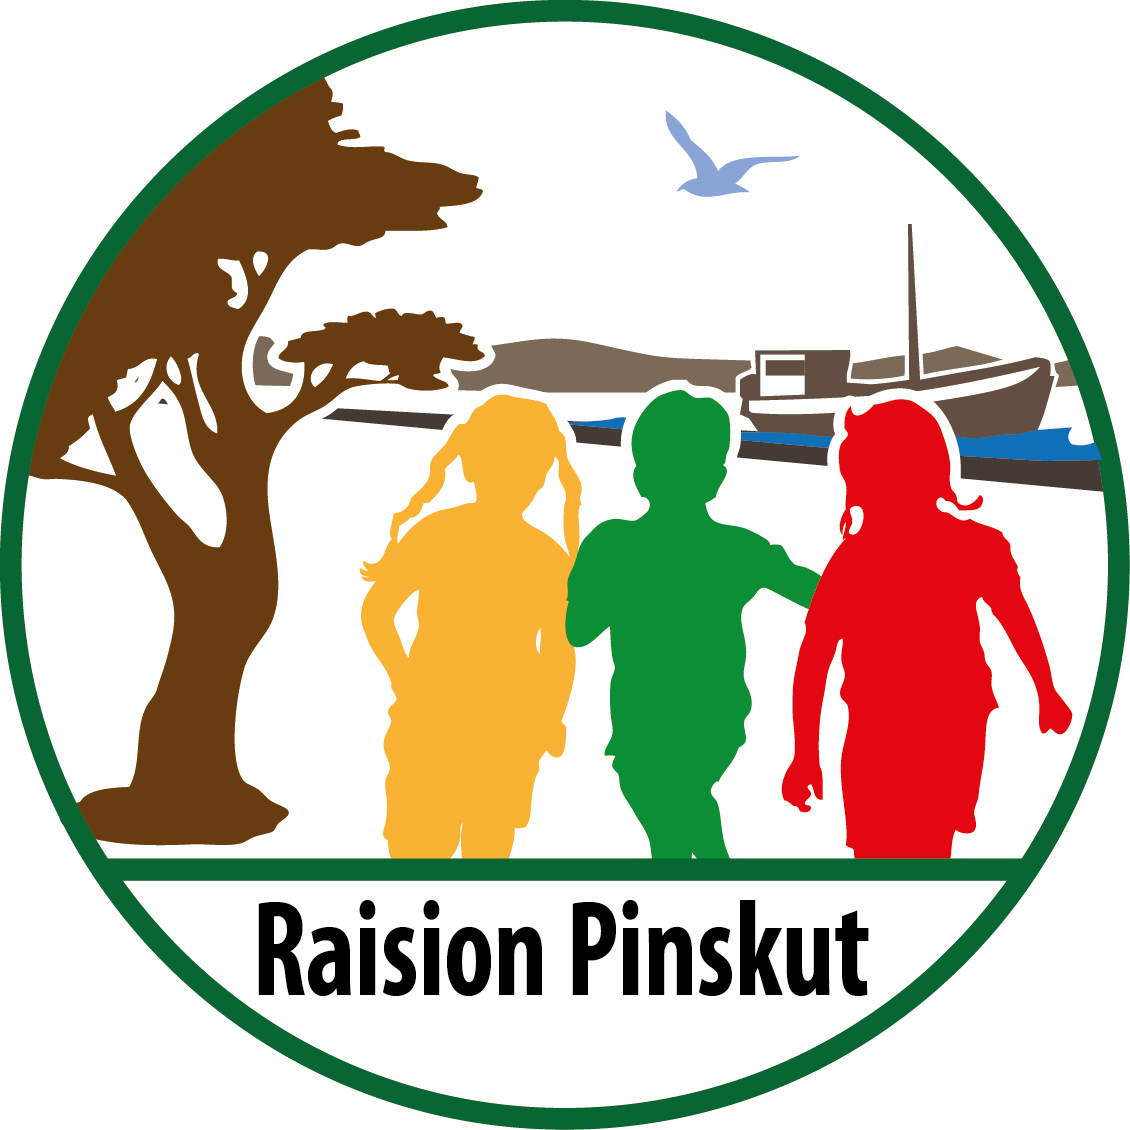 Raision Pinskujen logo